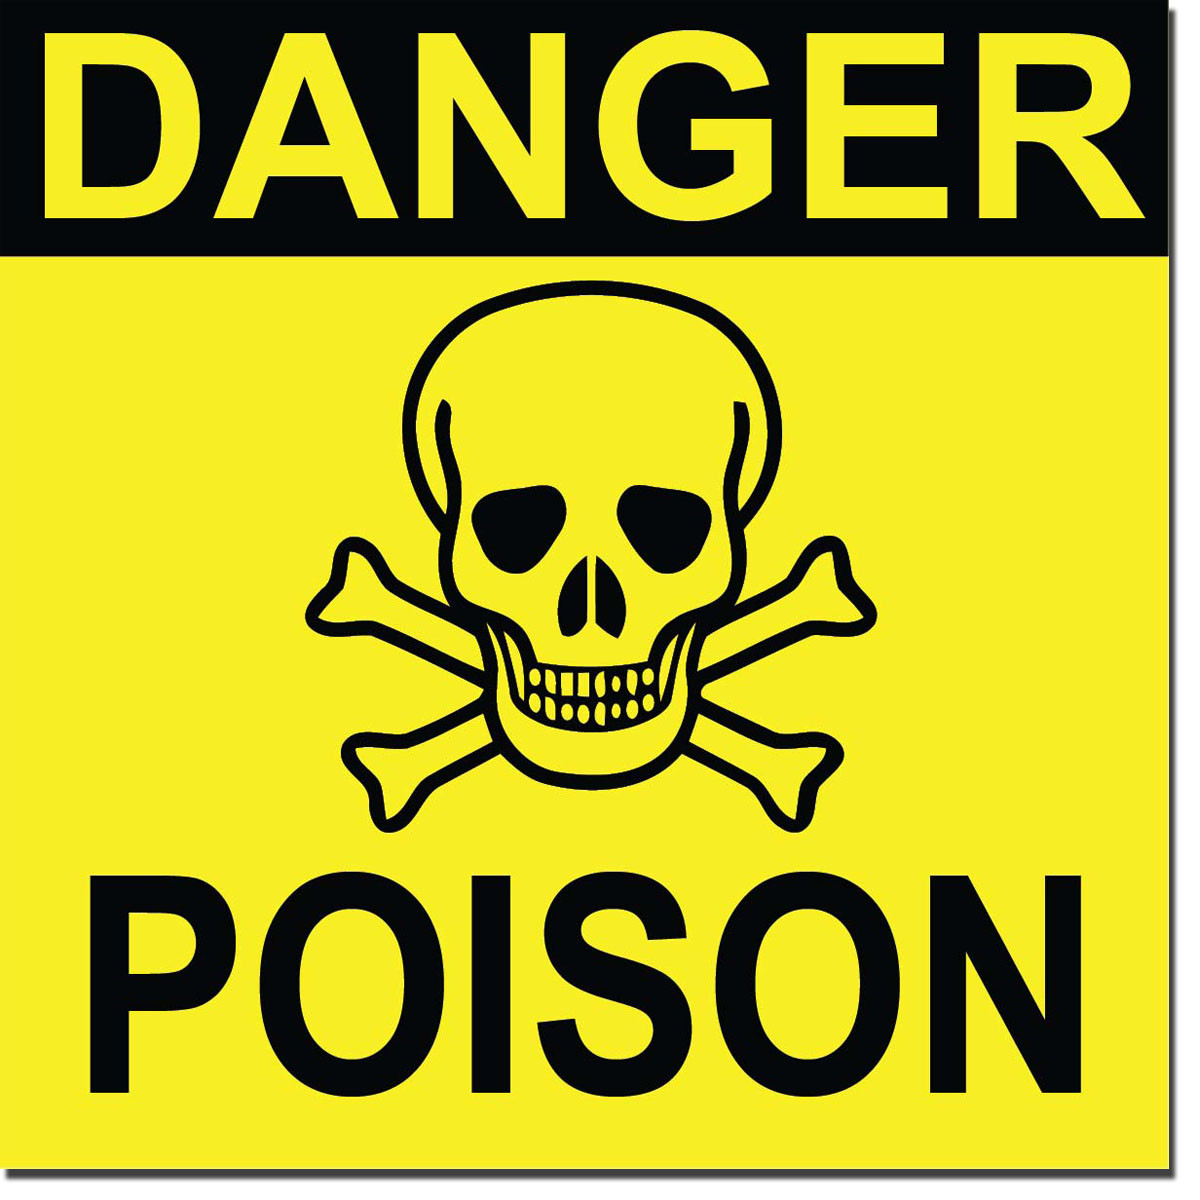 poison prevention.